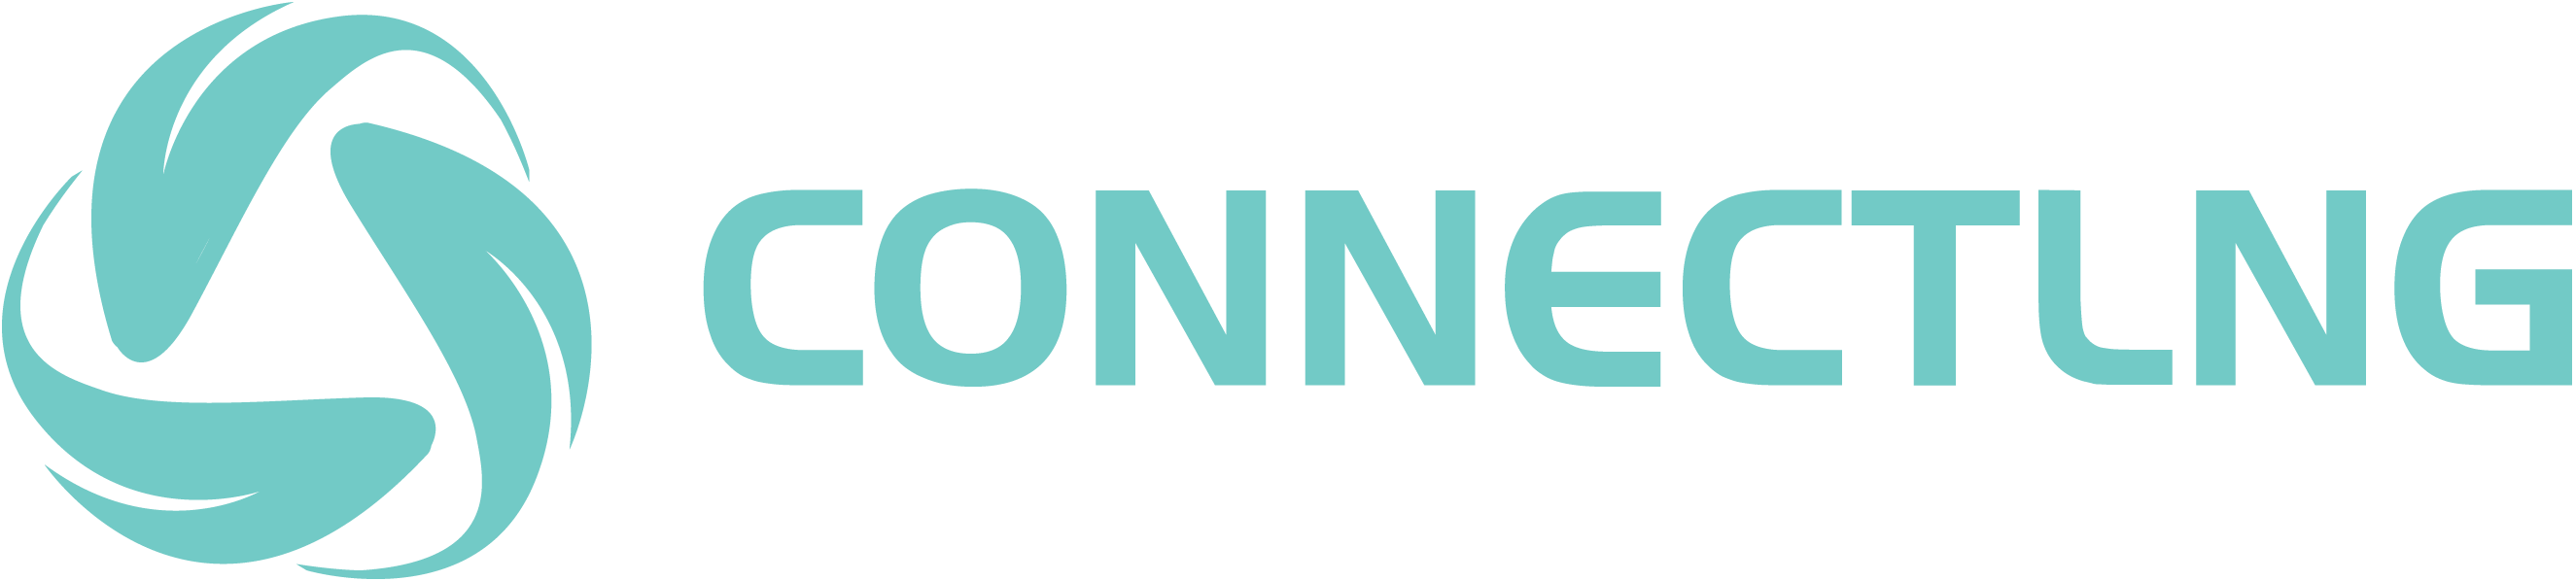 Connect LNG logo